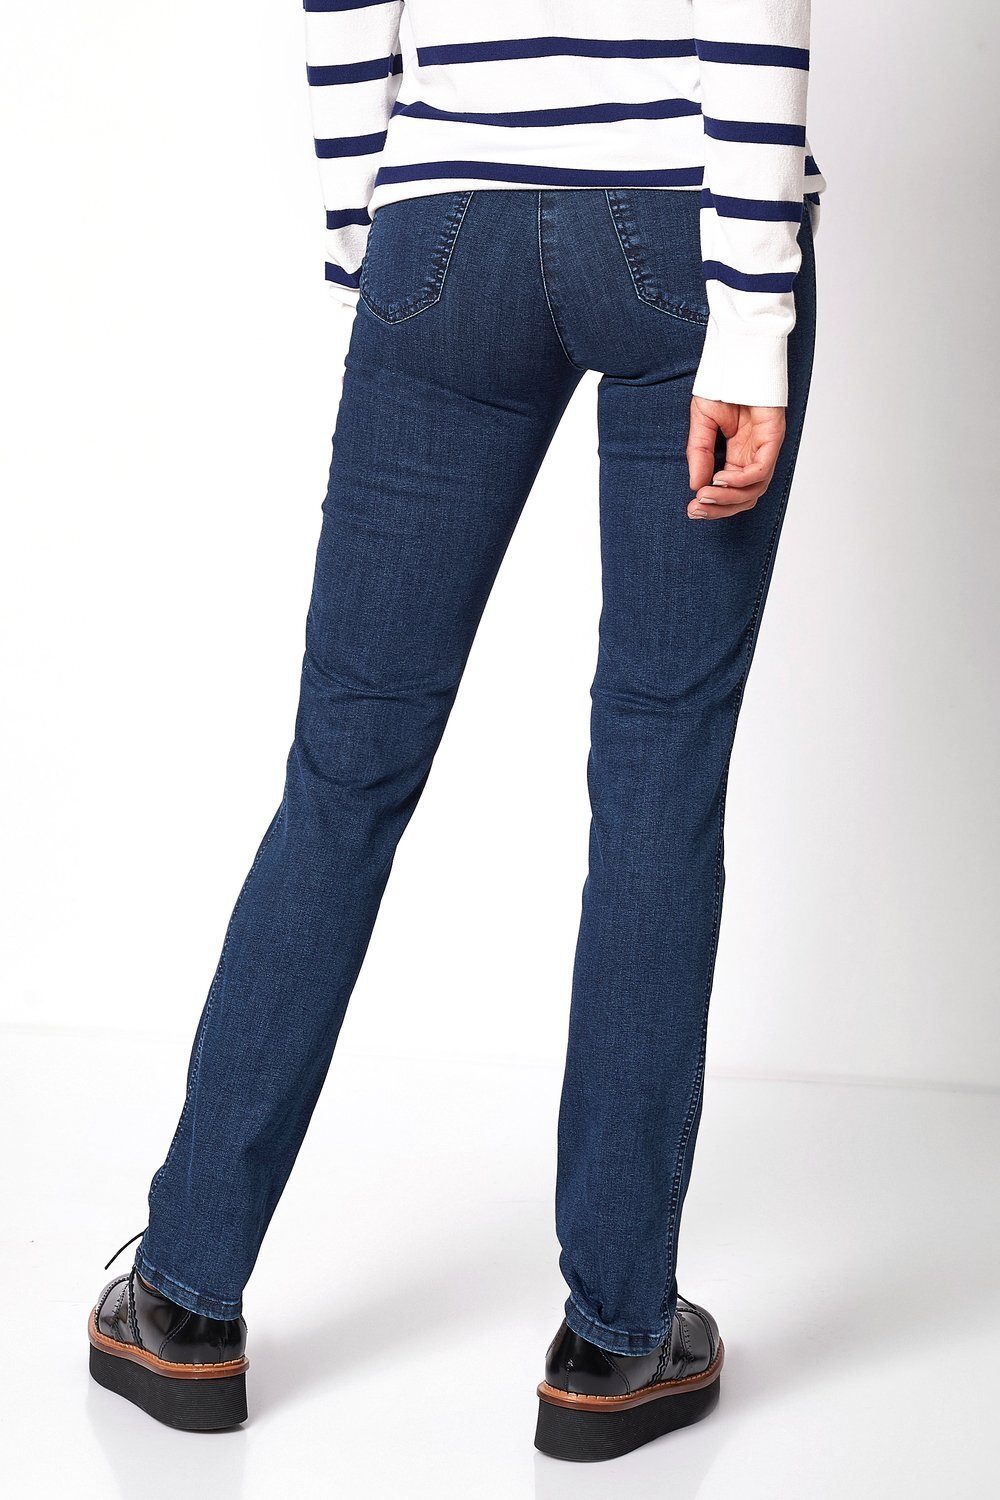 - 5-Pocket-Jeans mit loved dunkelblau TONI be 582 Leibhöhe hoher